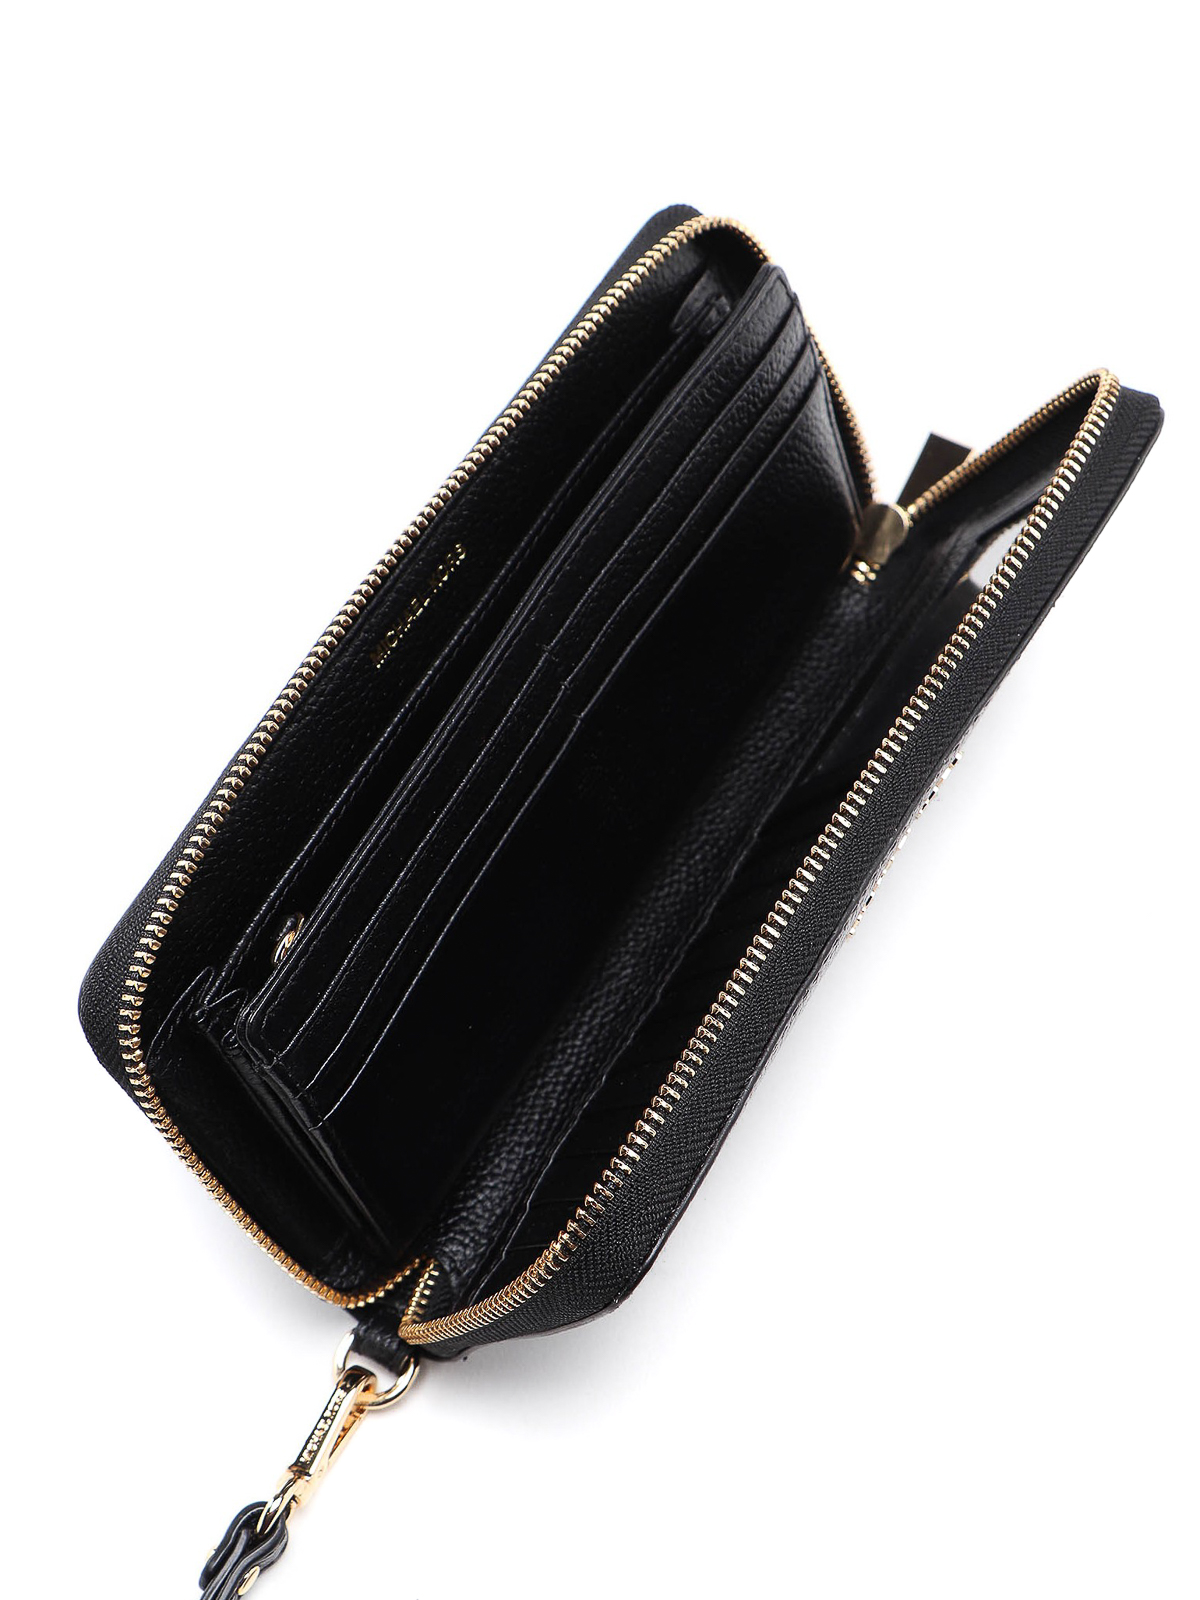 Michael Kors Women's Jet Set Travel Leather Wristlet Wallet